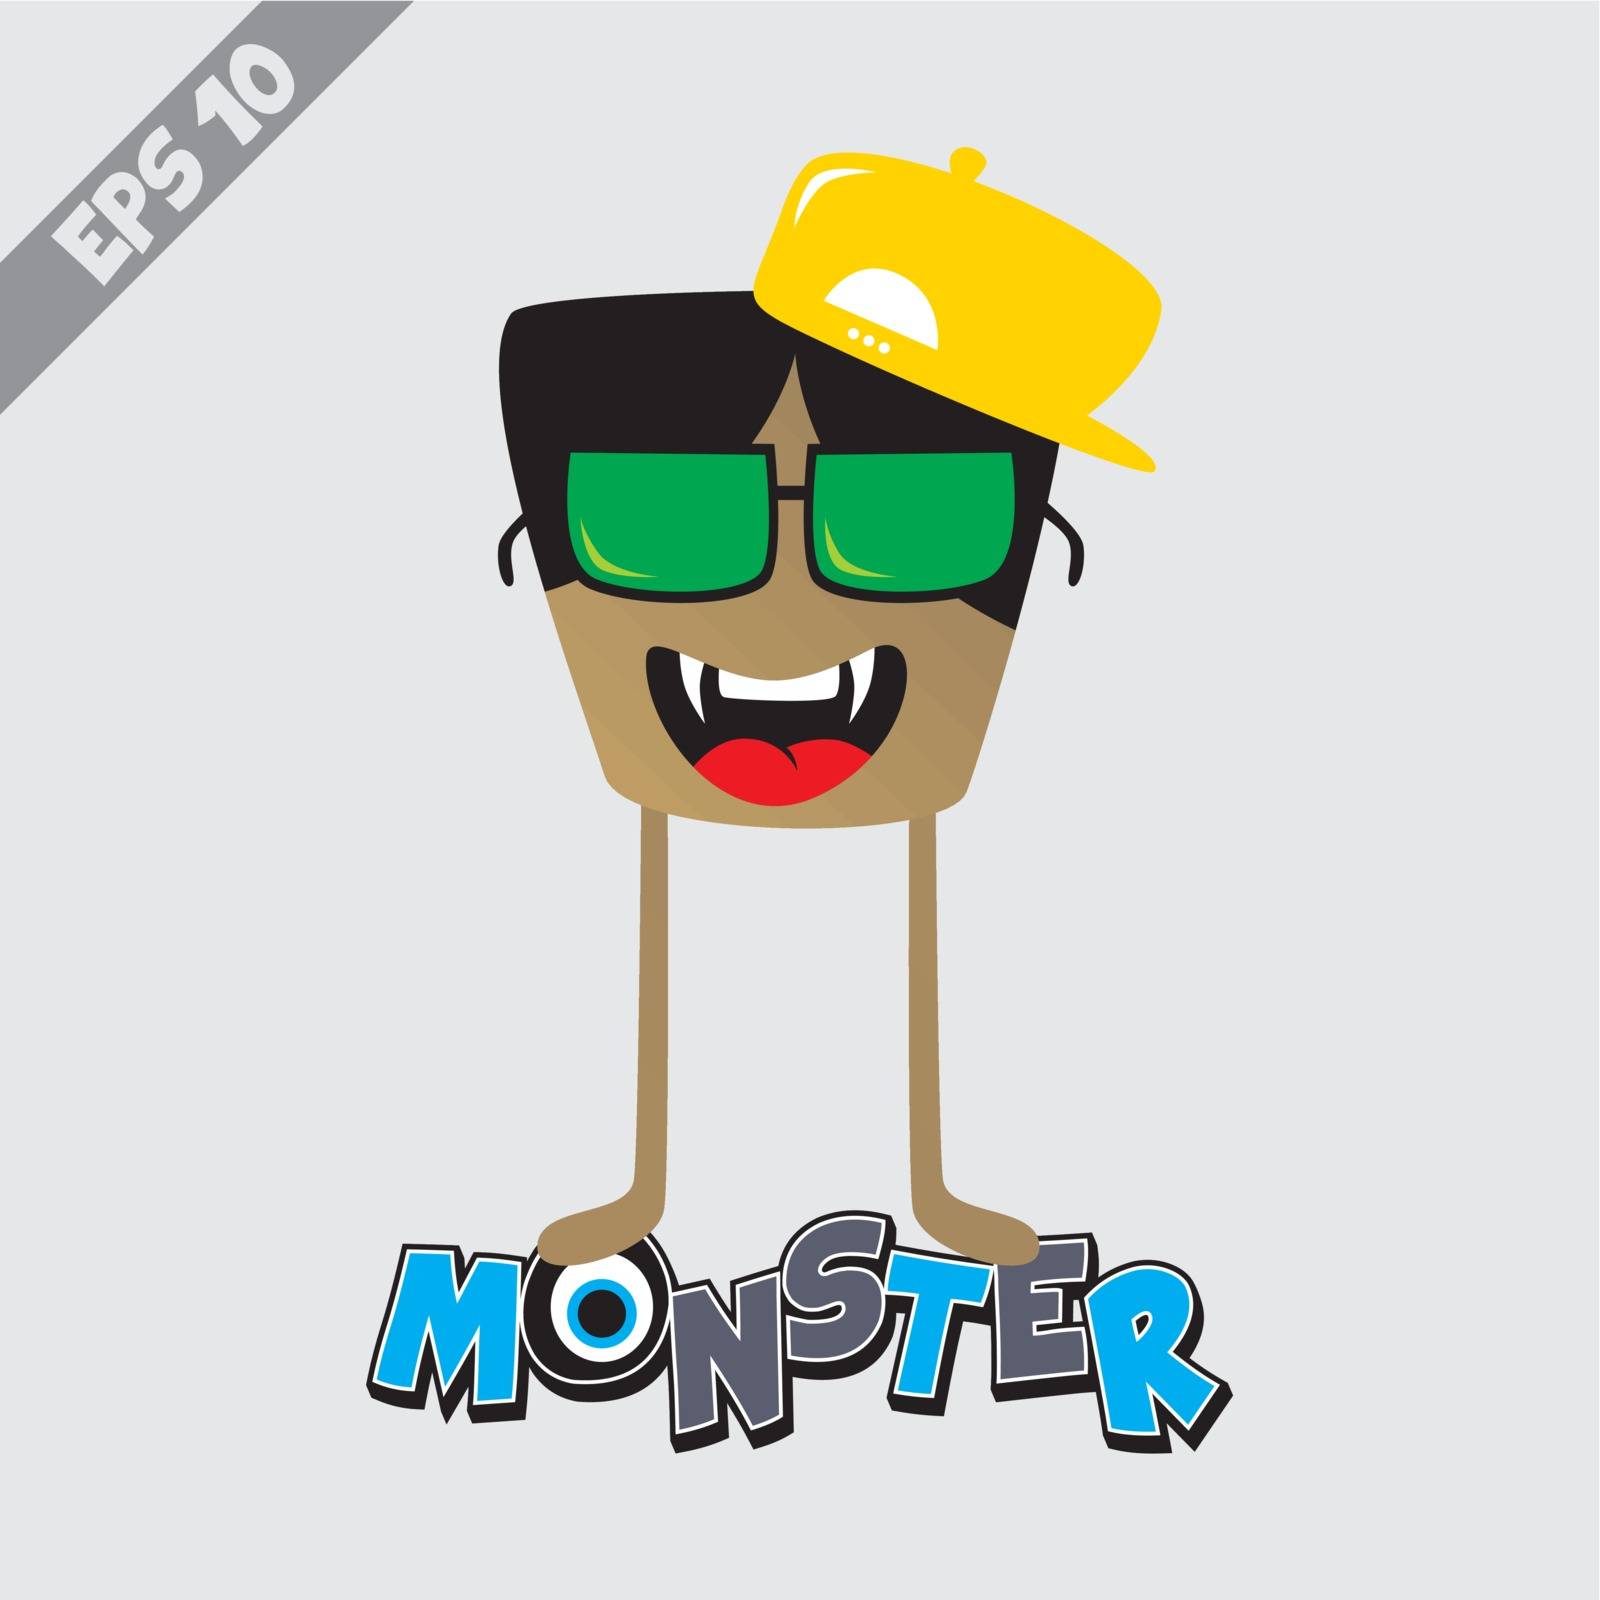 cartoon monster character theme vector art illustration